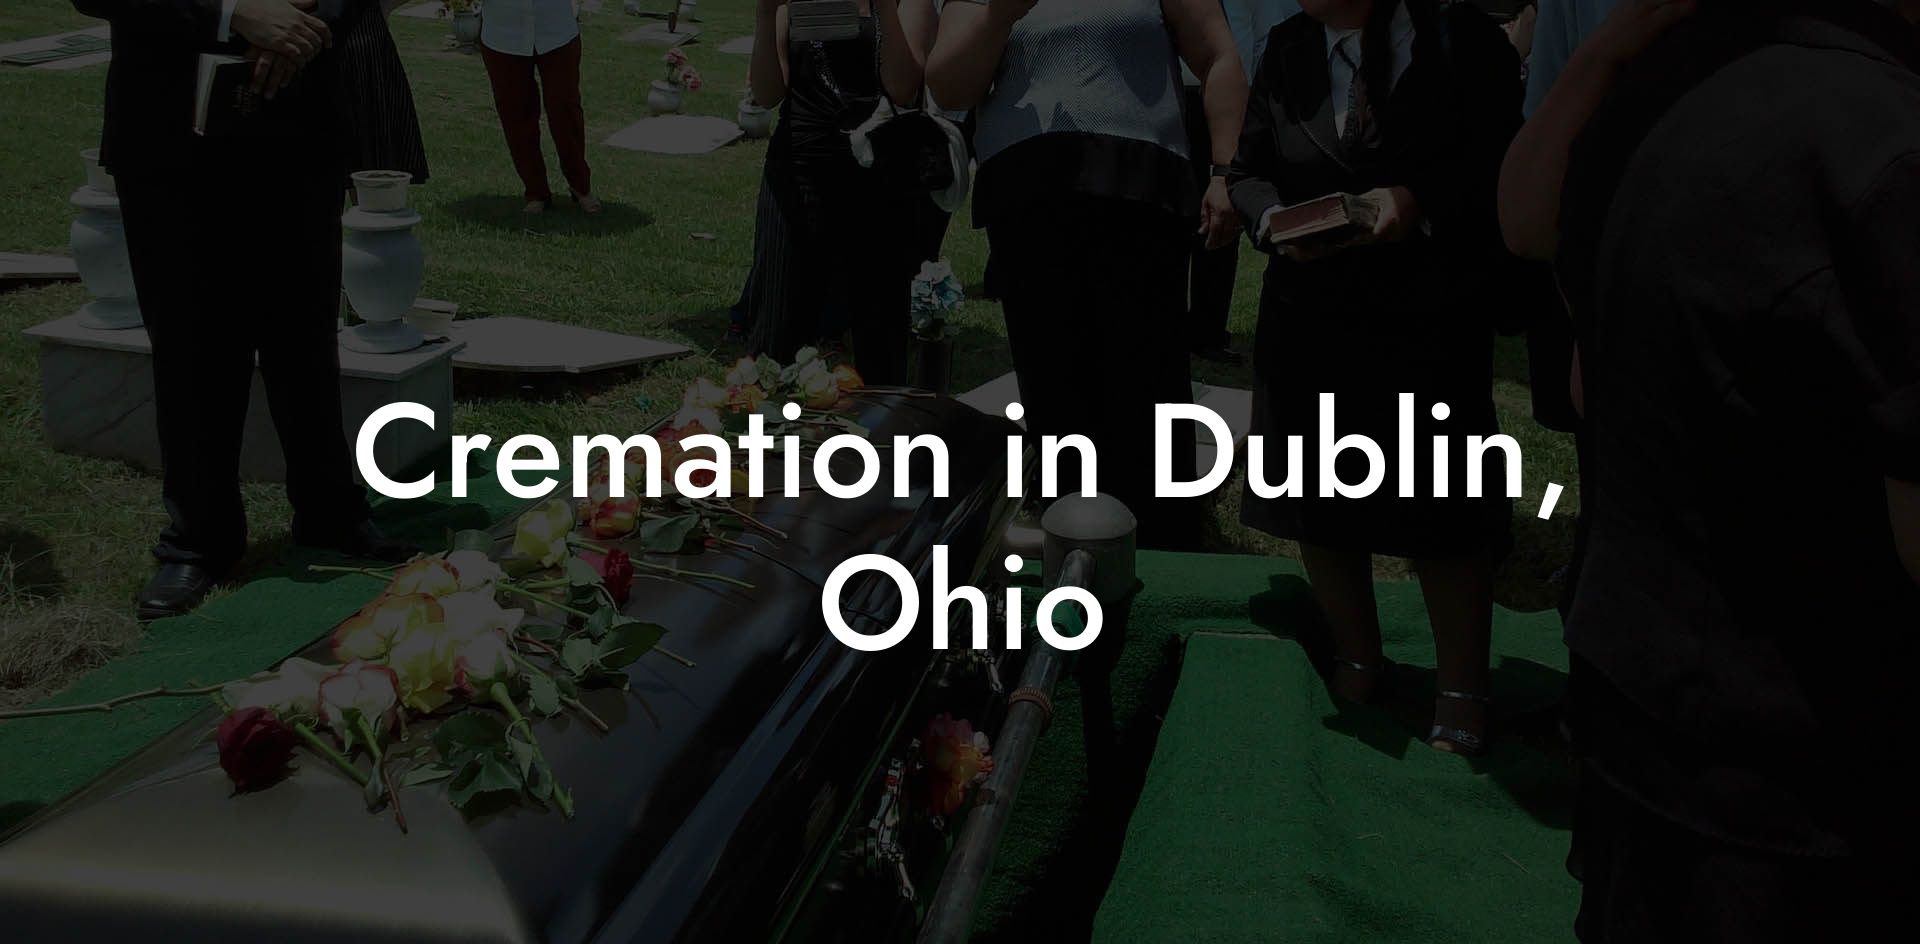 Cremation in Dublin, Ohio